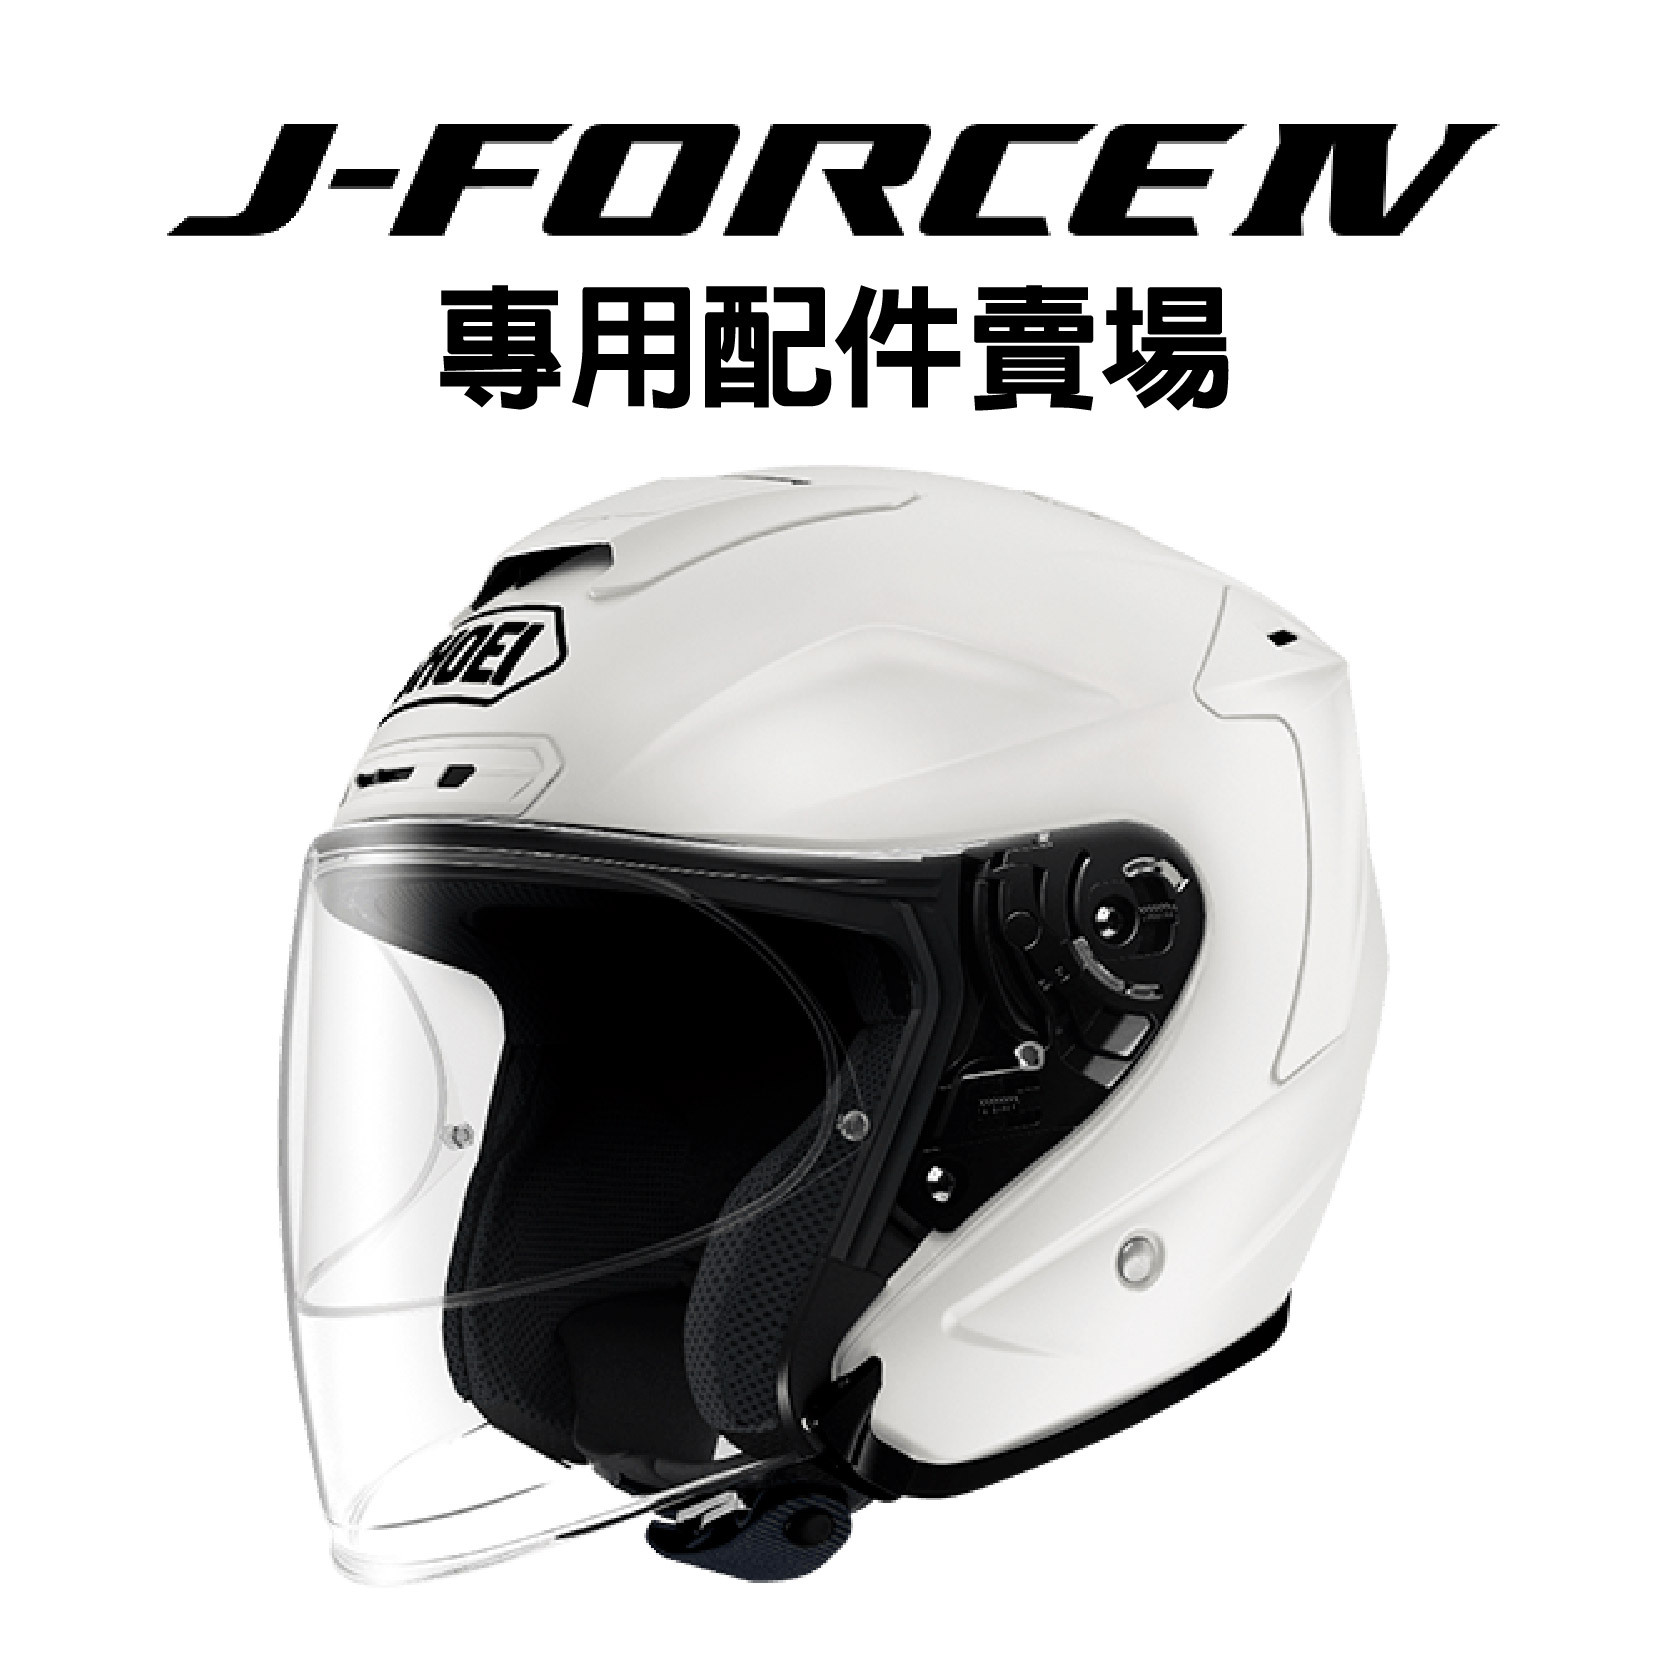 SHOEI J-FORCE IV 安全帽專用配件賣場｜安信騎士